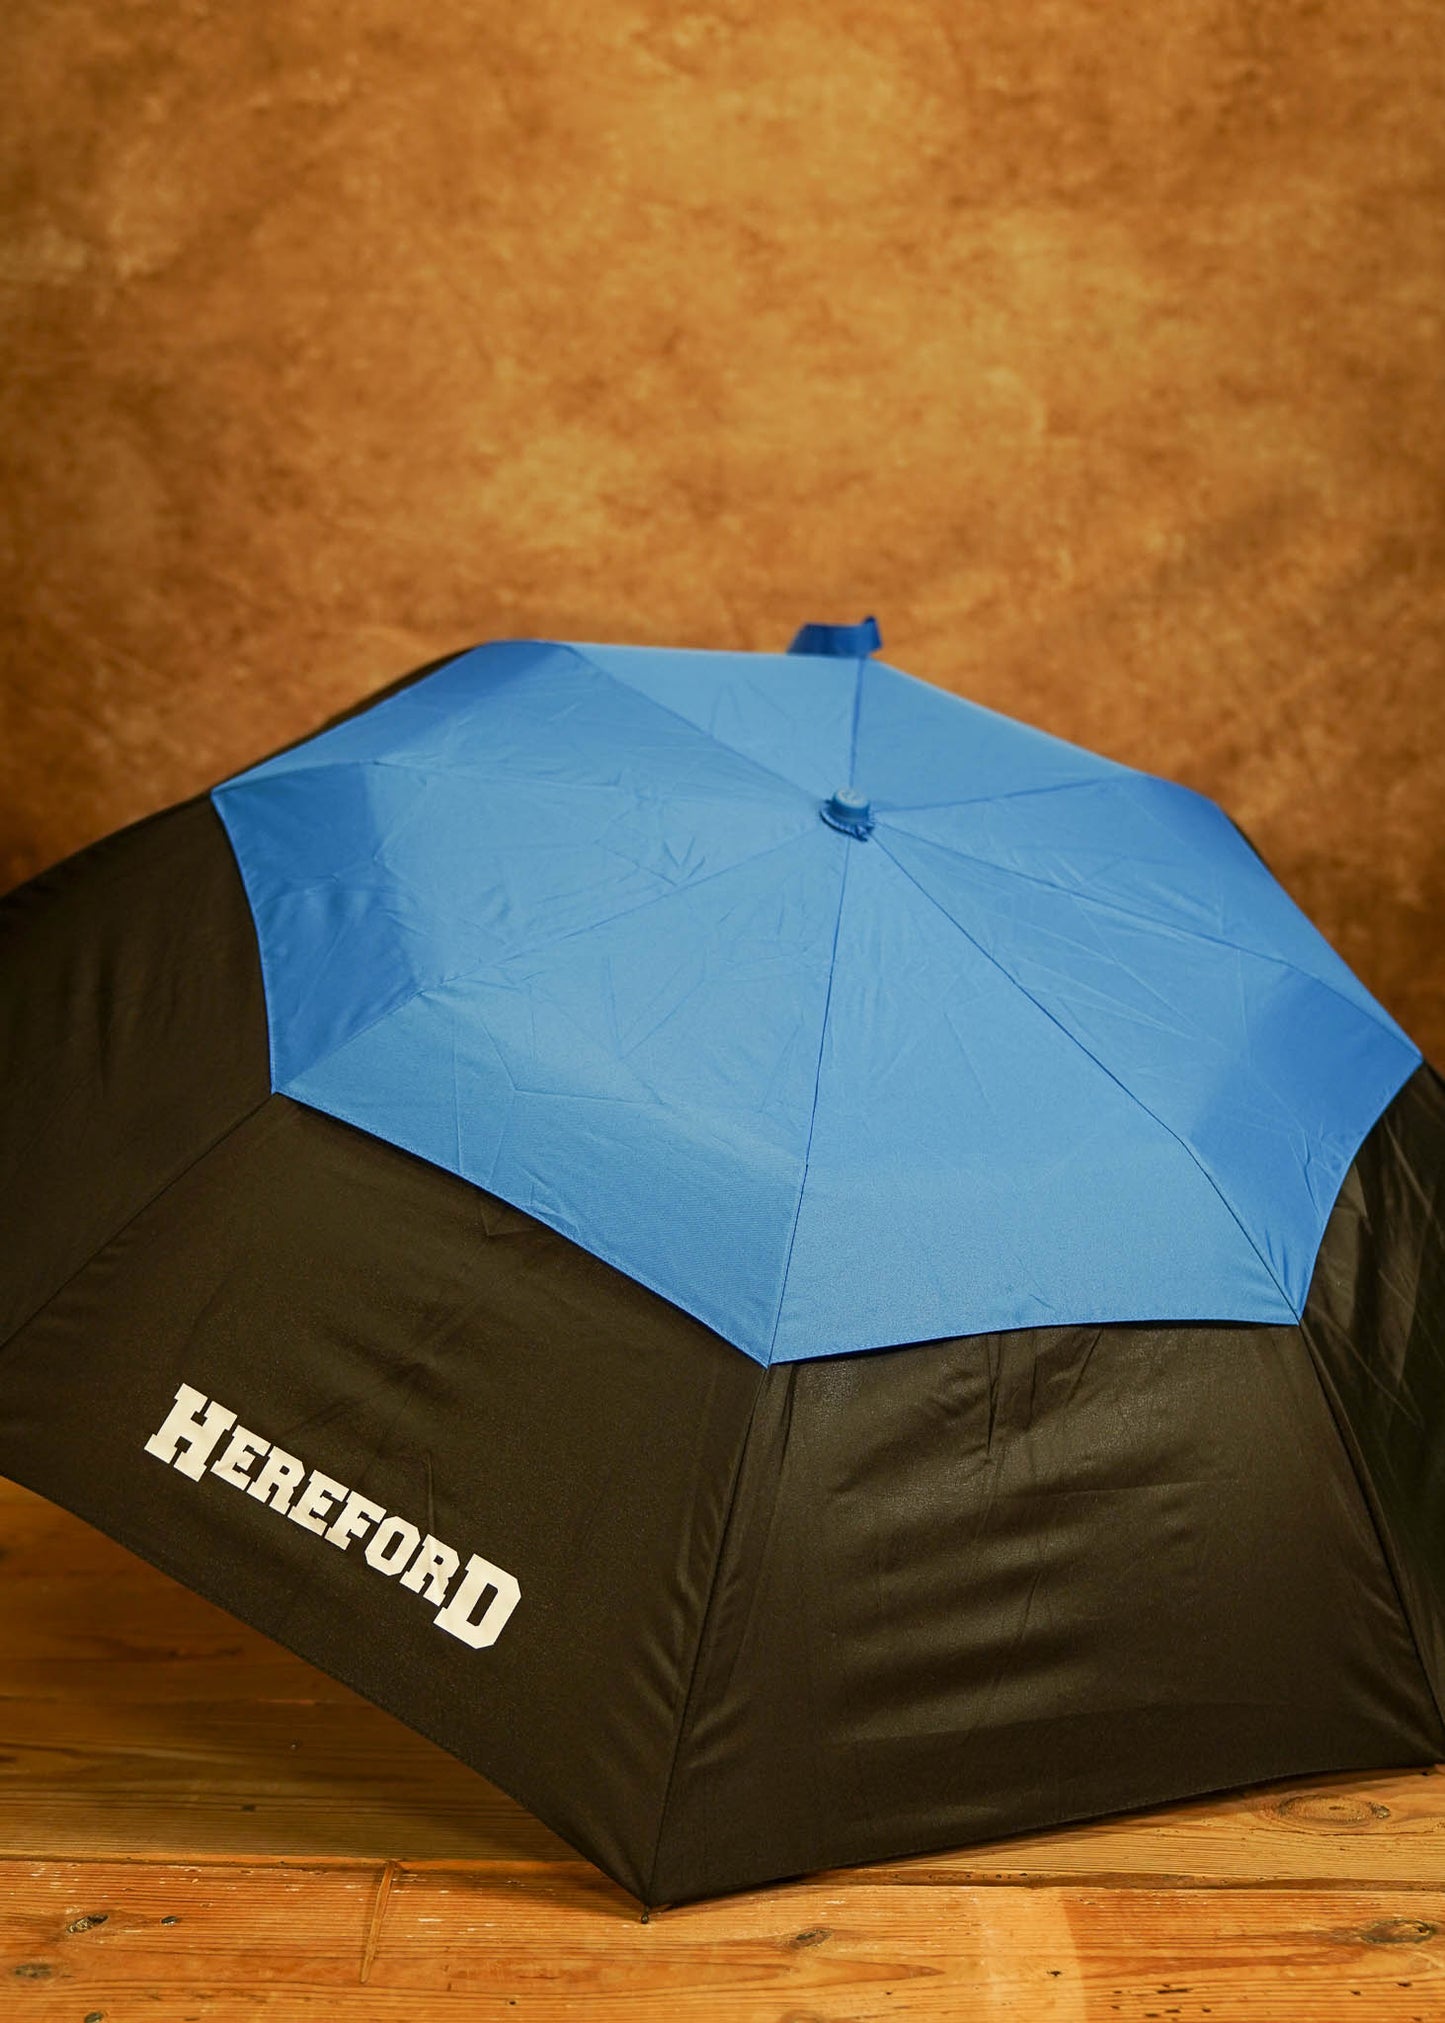 Hereford Umbrella